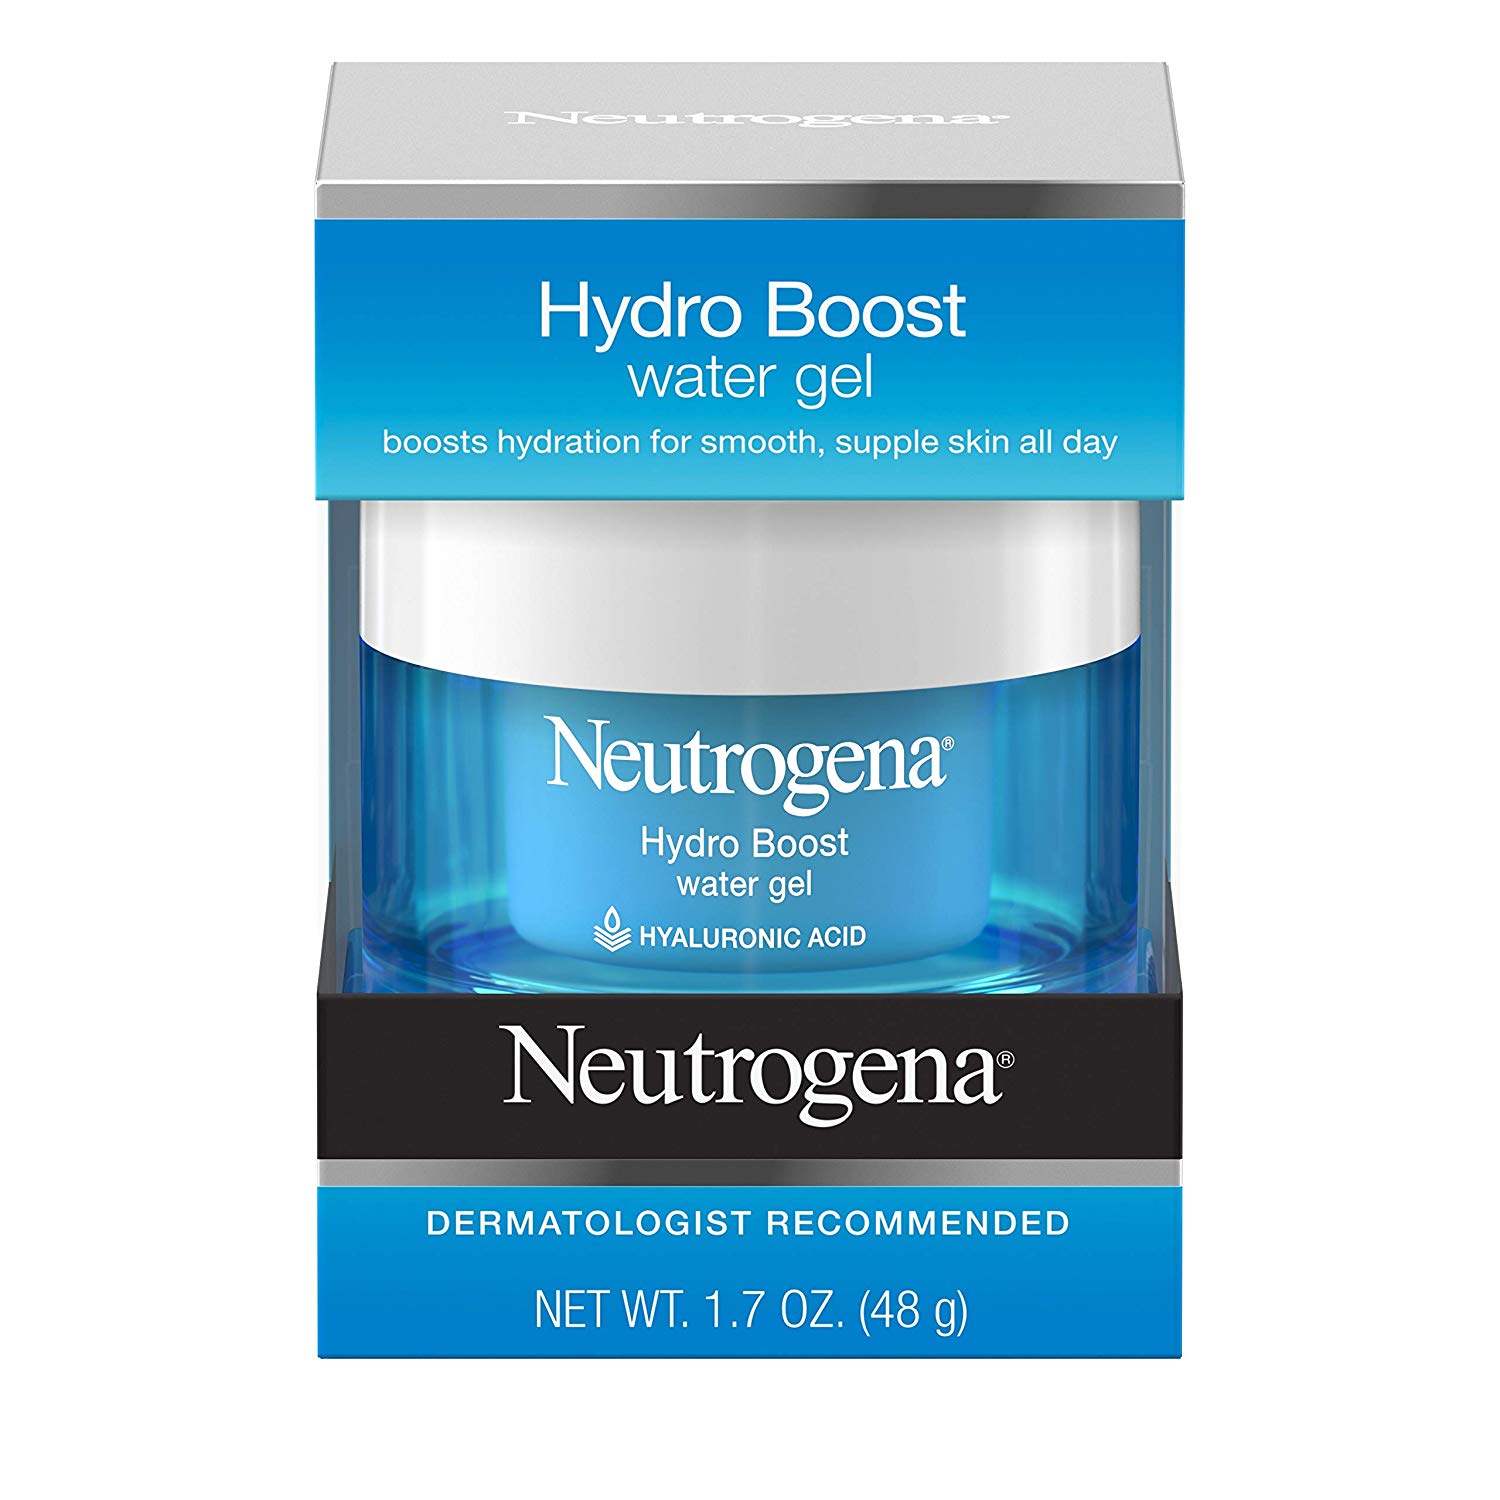 Neutrogena-Hydro-Boost-Hyaluronic-Acid-Hydrating-Water-Face-Gel-Moisturizer-for-Dry-Skin